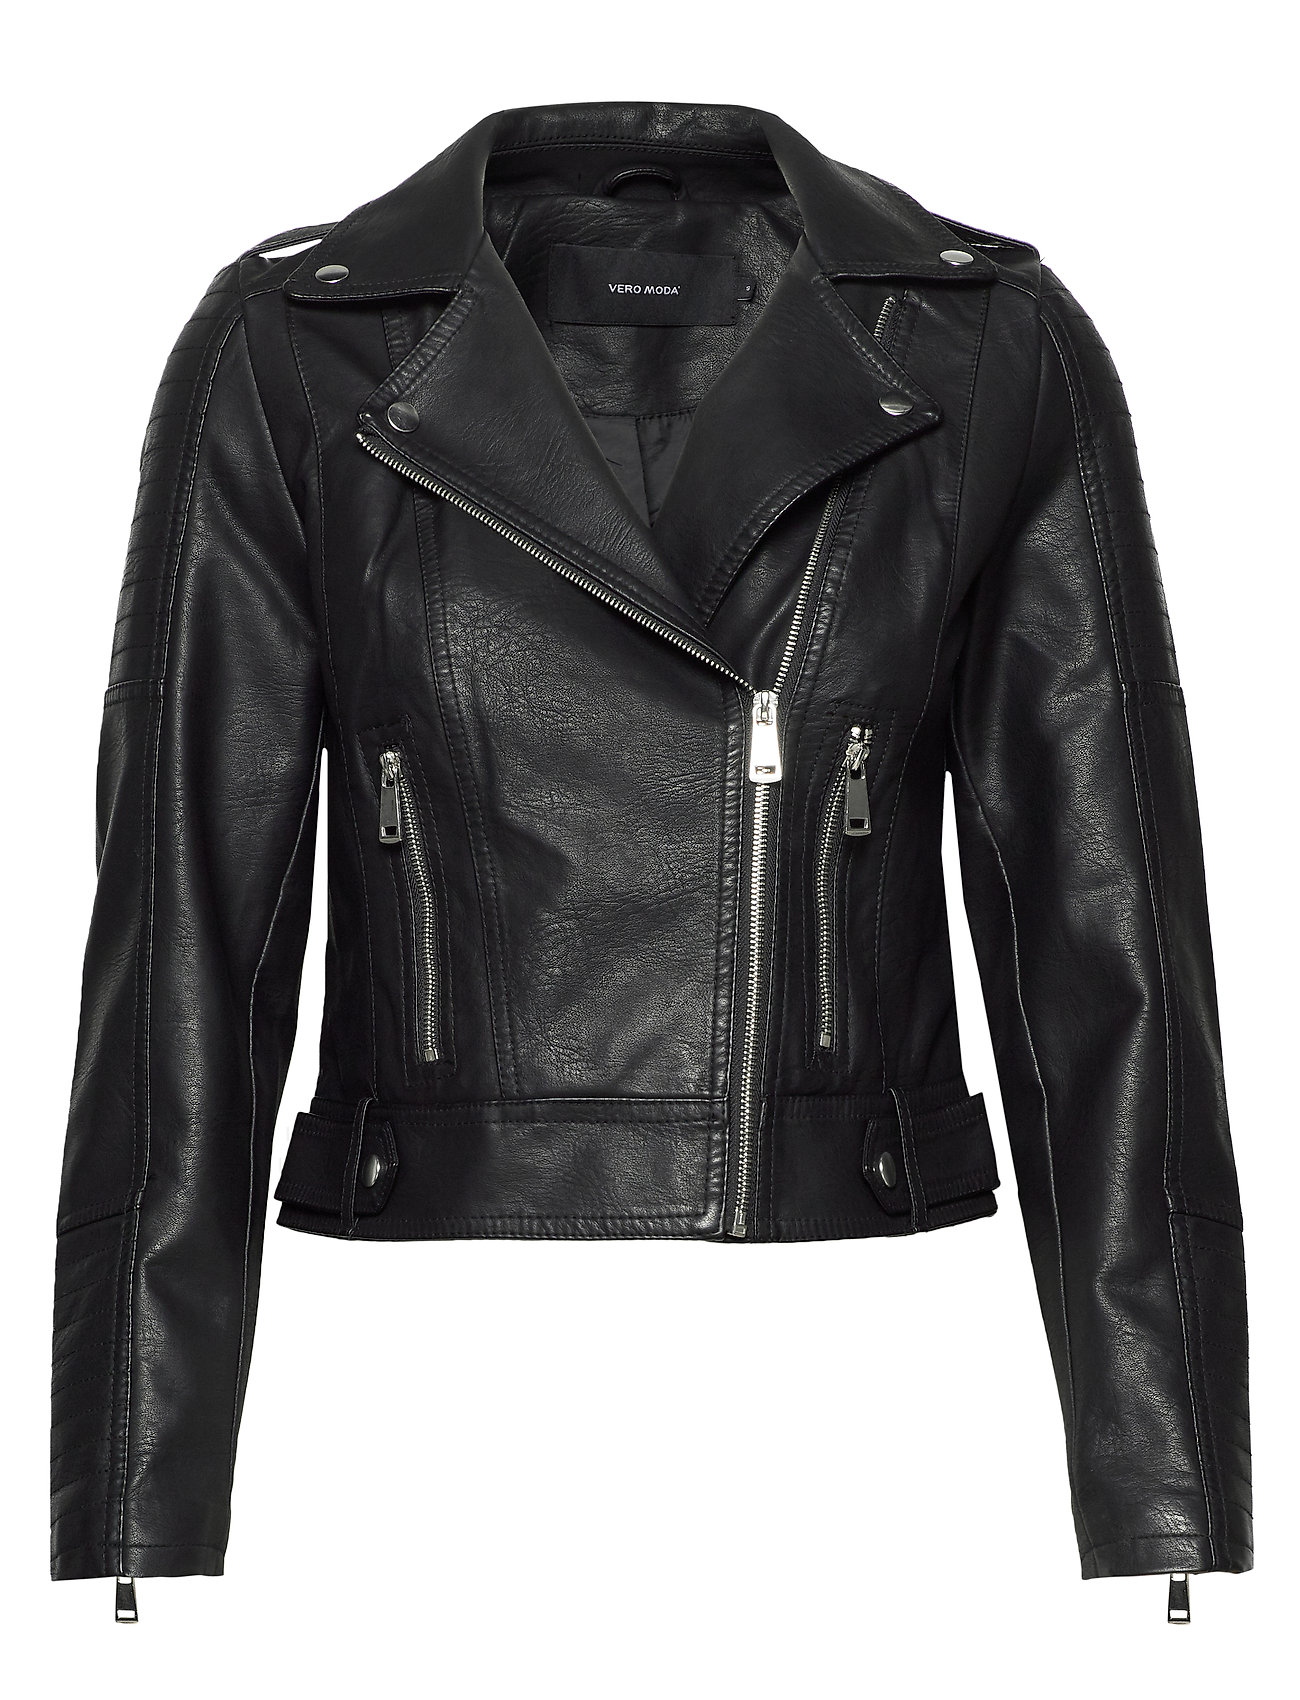 Vero Moda Coated Jacket - 359 kr. Køb fra Vero Moda online på Boozt.com. Hurtig levering & nem